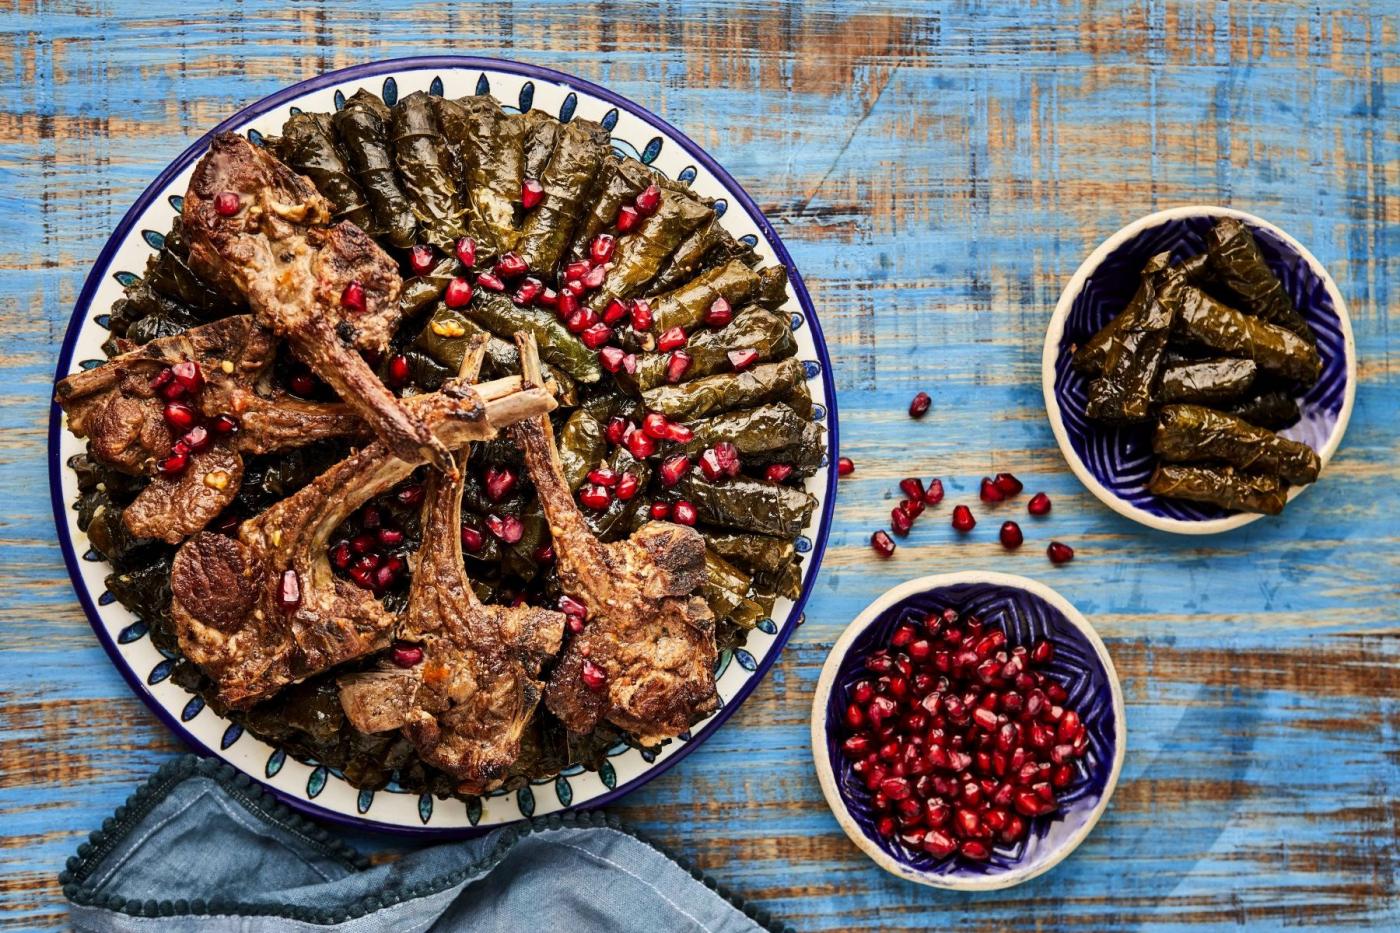 Craving-Palestine-Rachida-Tlaib-lamb-chops-vine-leaves